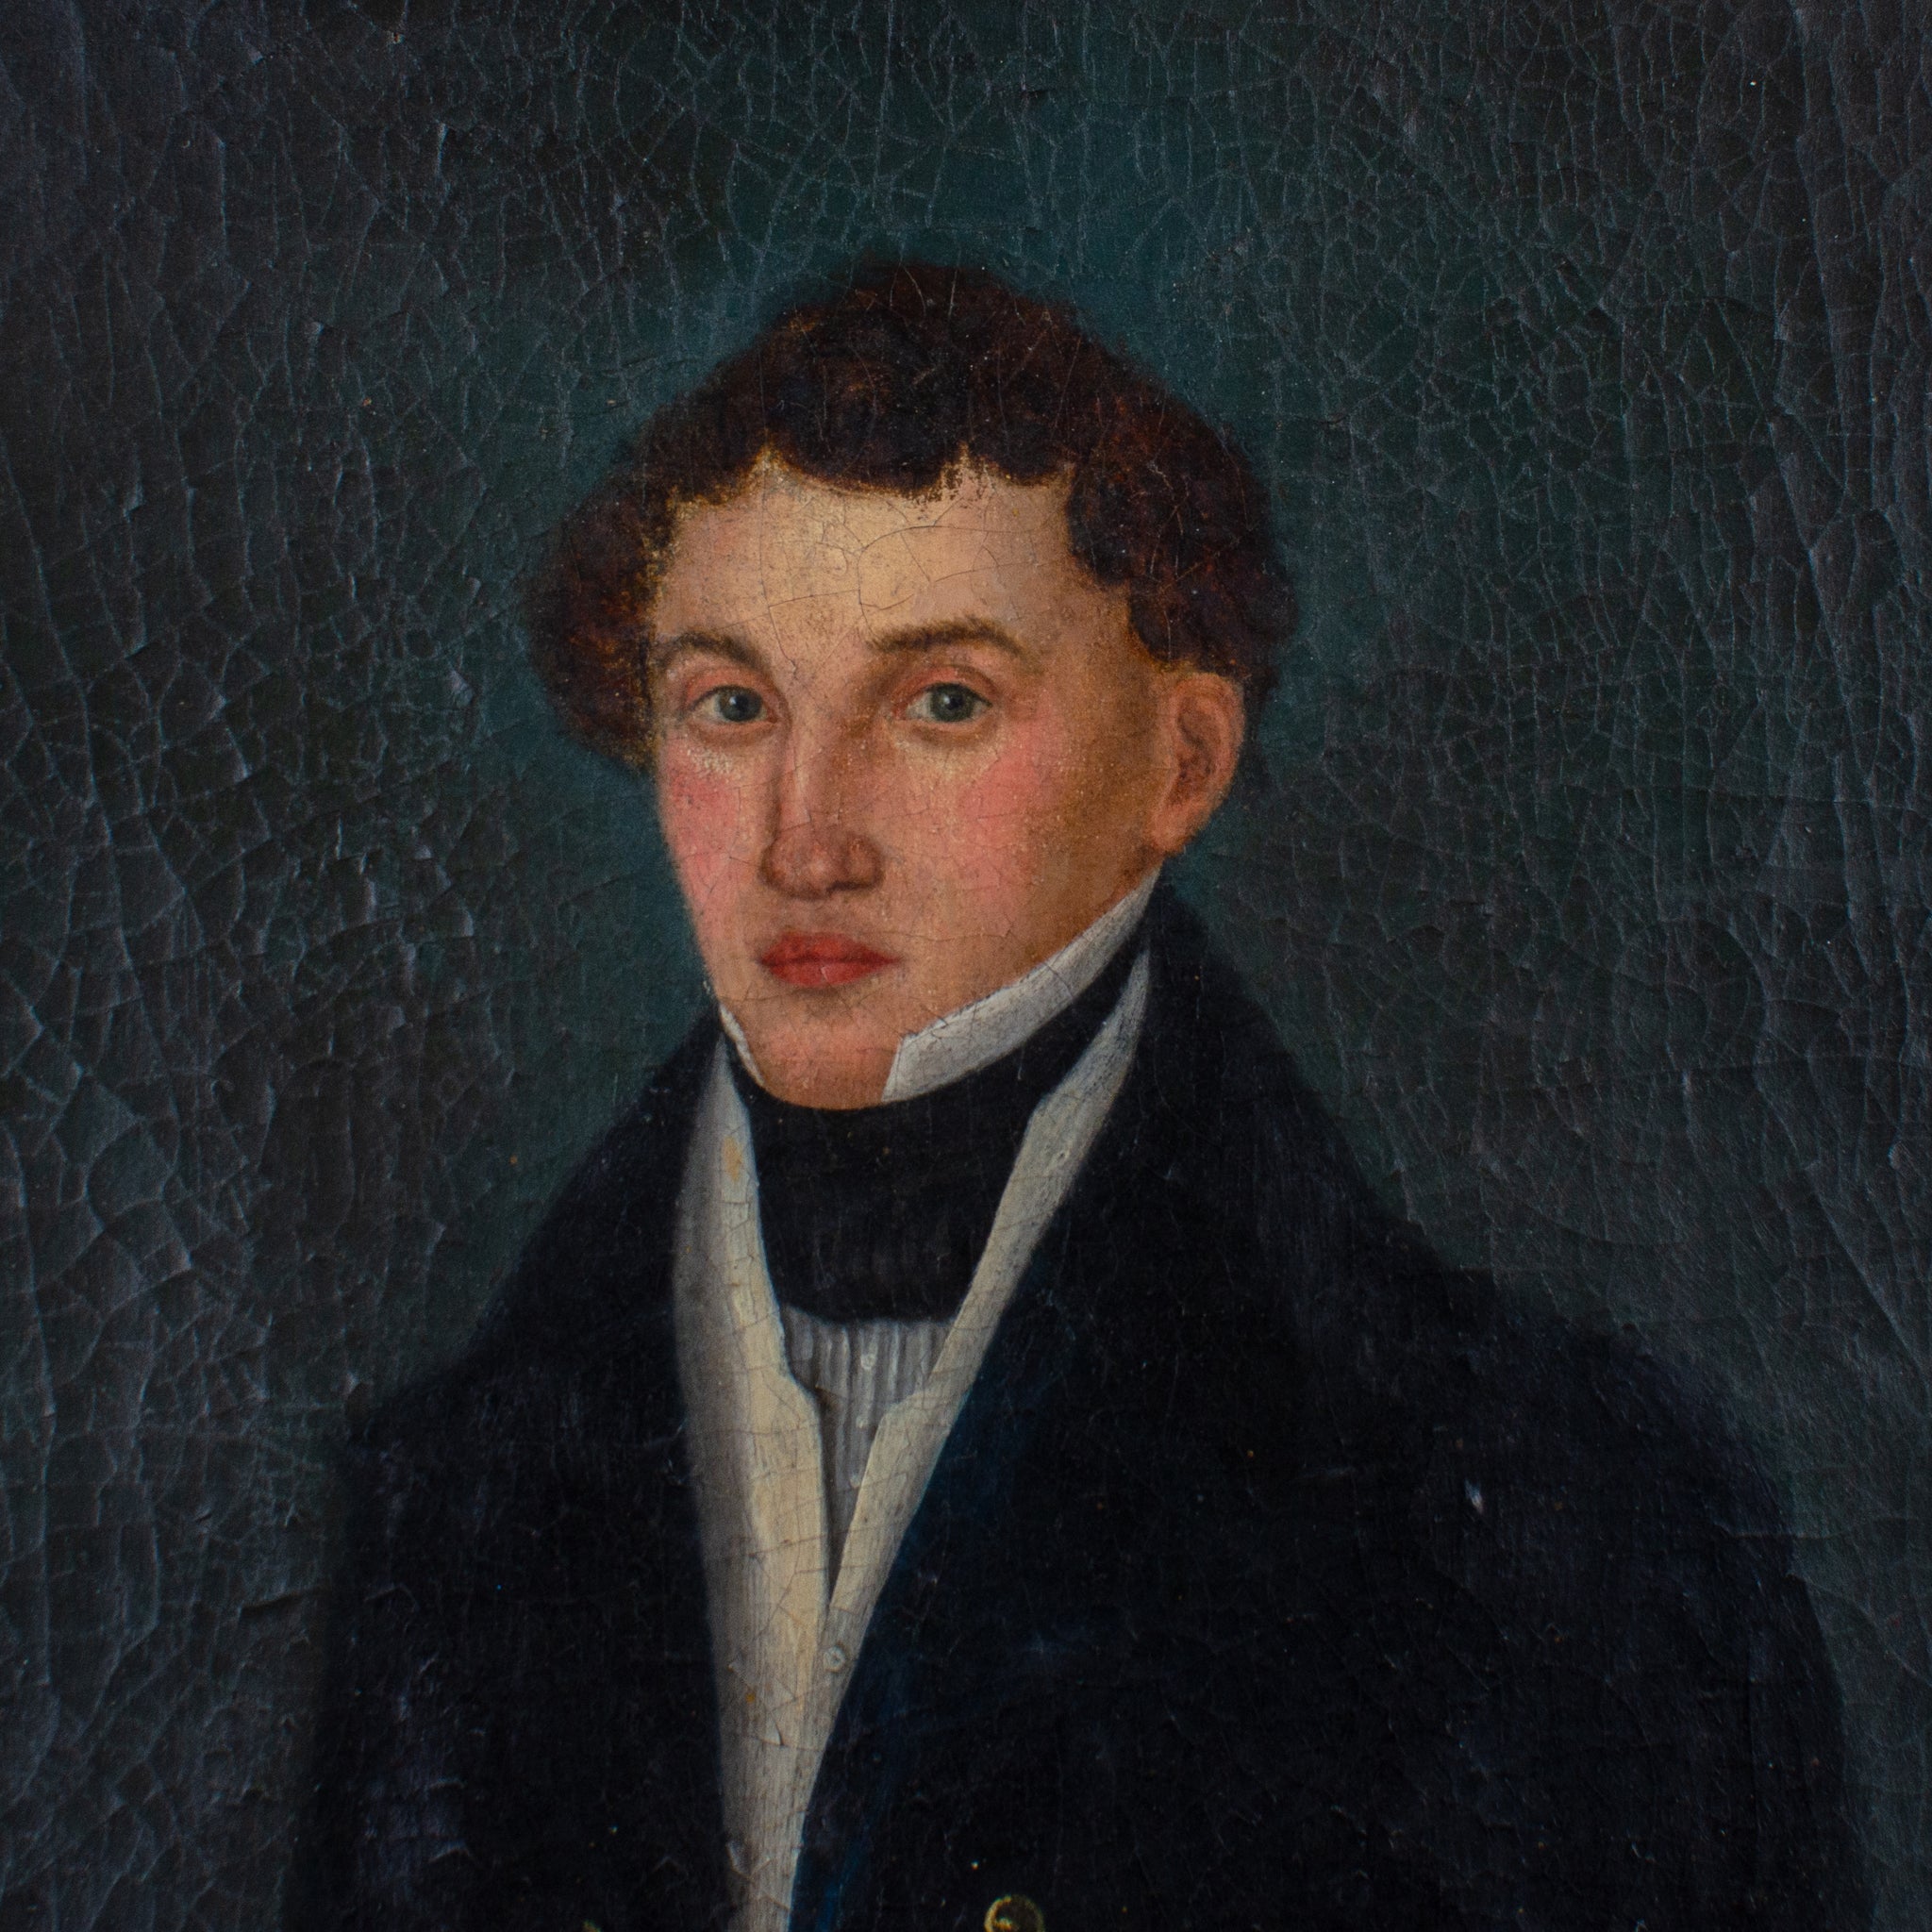 Limner Portrait of Young Gentleman, 19th Century